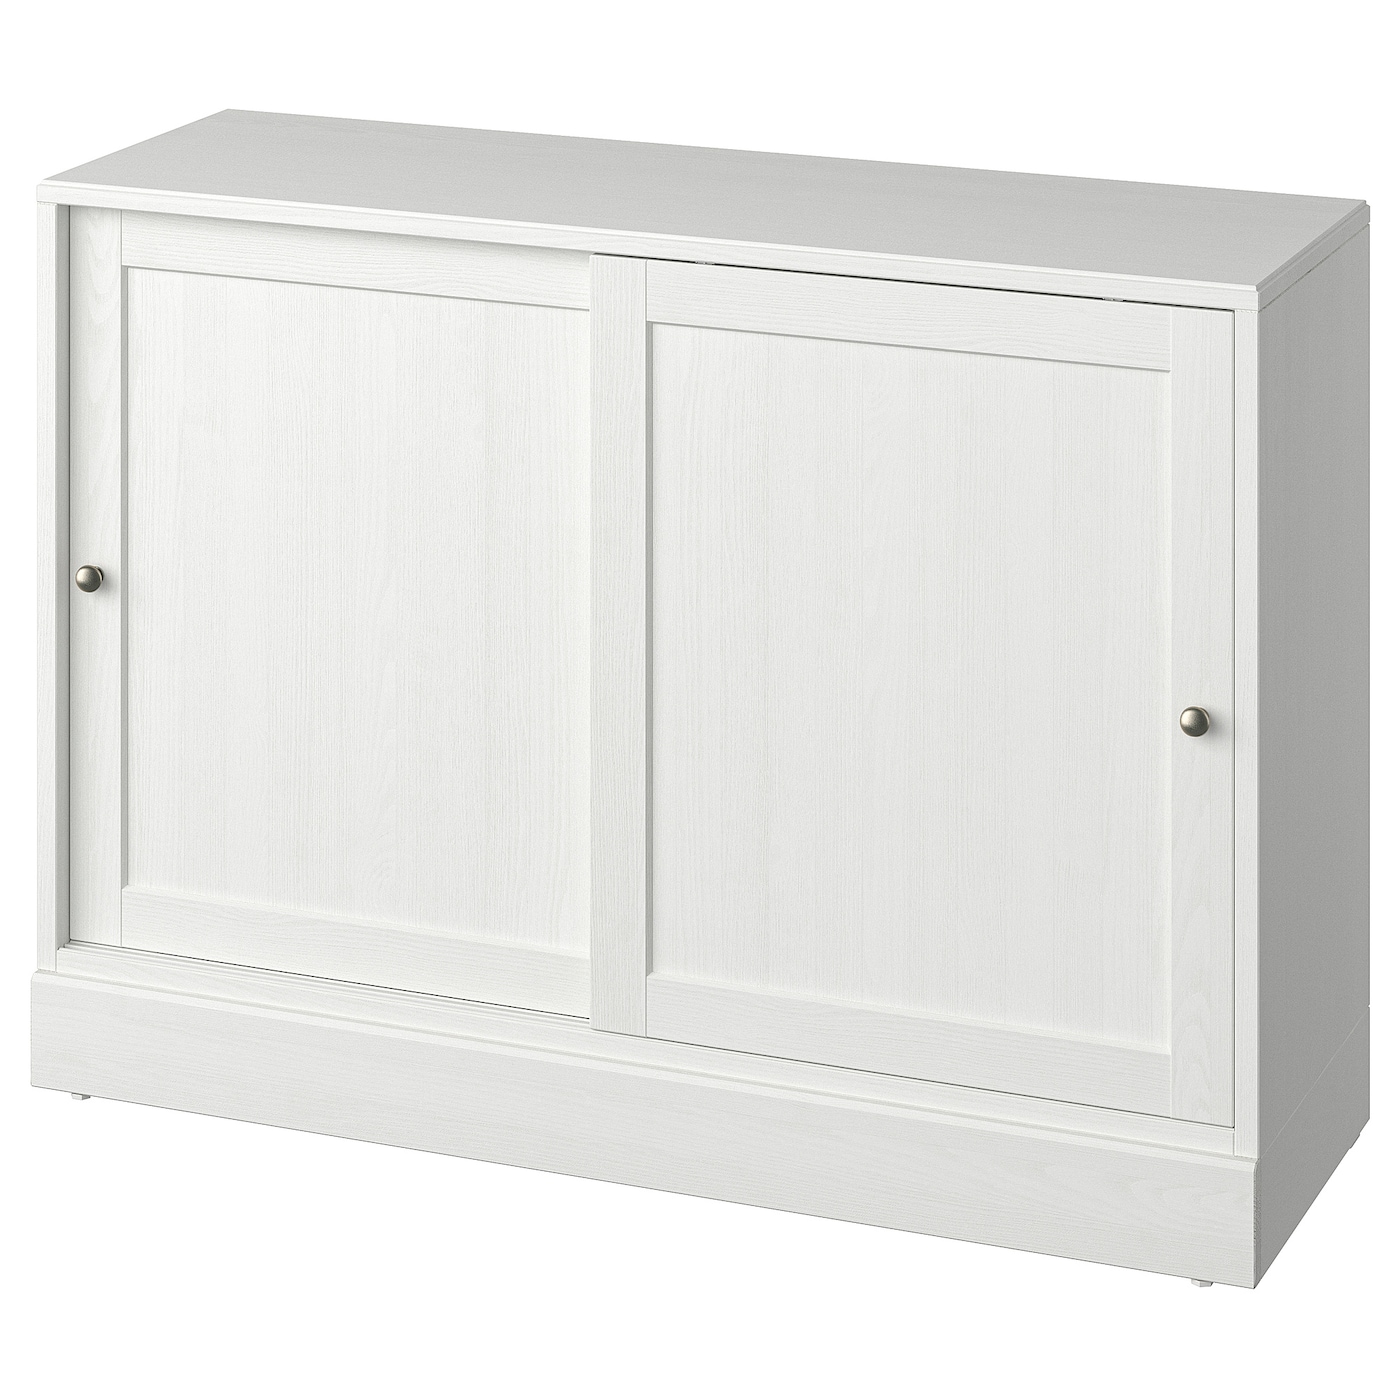 Комод - HAVSTA IKEA/ ХАВСТА ИКЕА, 121х89 см, белый